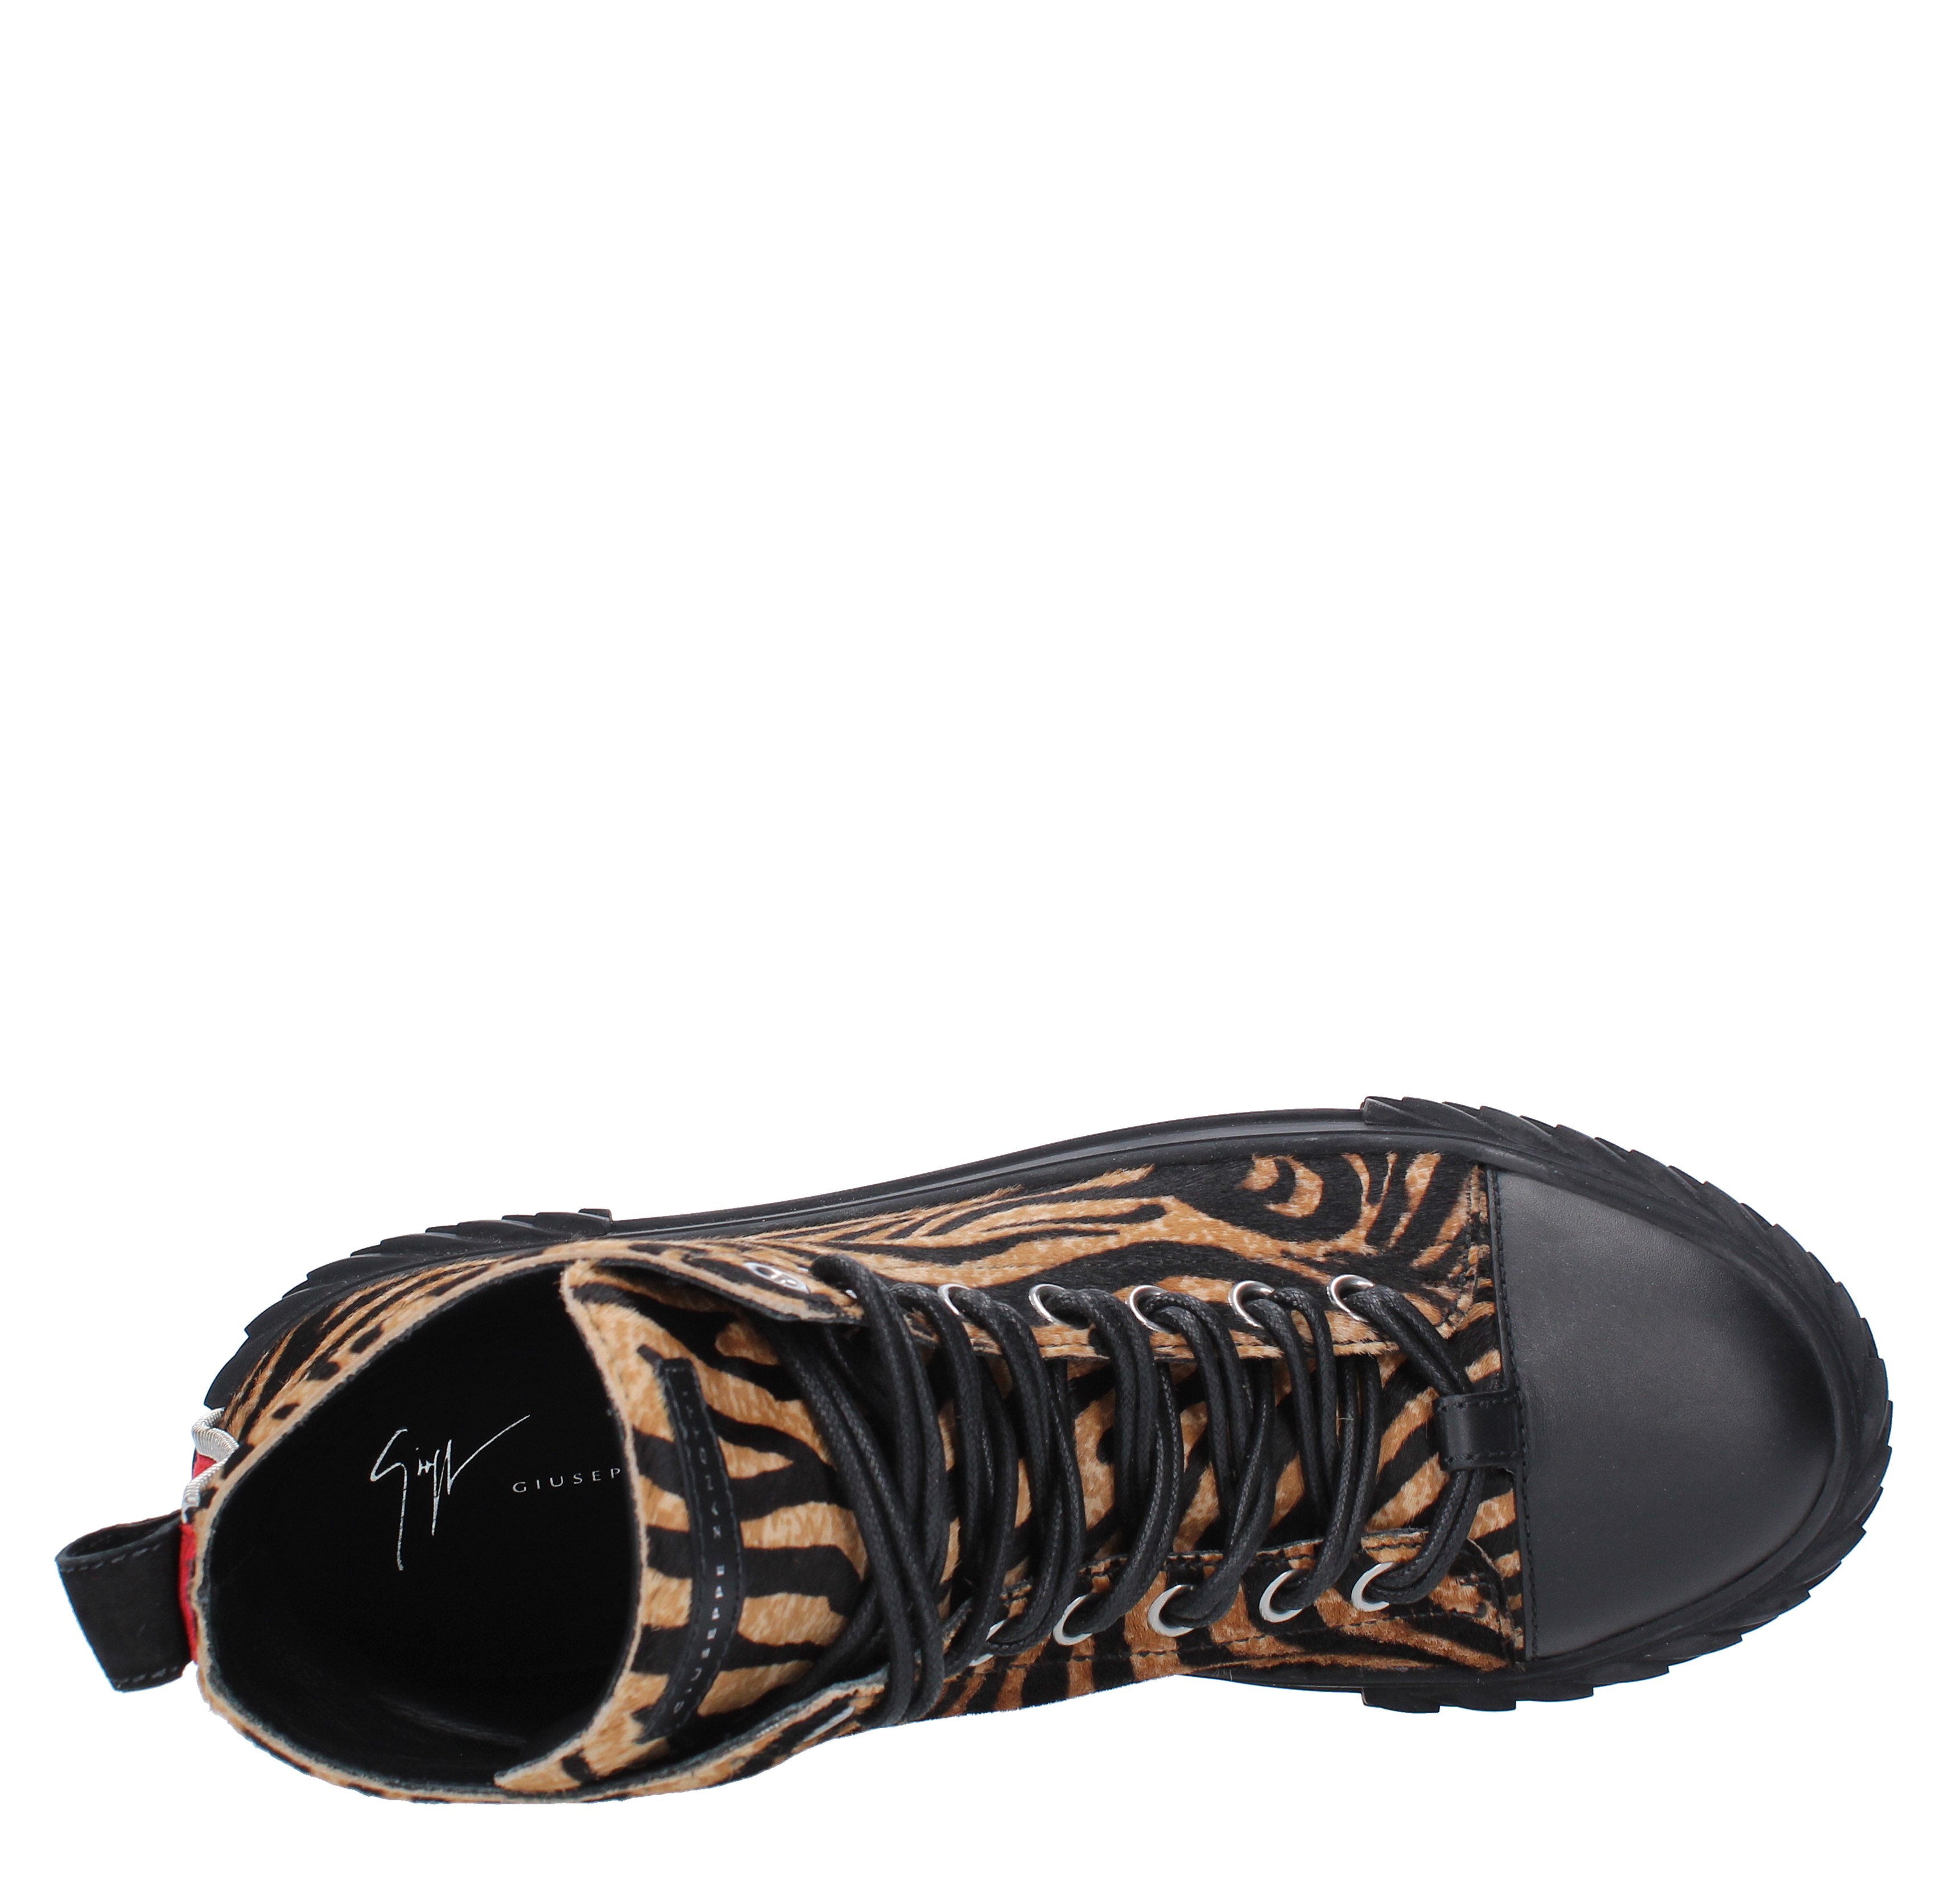 Leather and ponyskin sneakers GIUSEPPE ZANOTTI | RU90043NERO ZEBRATA